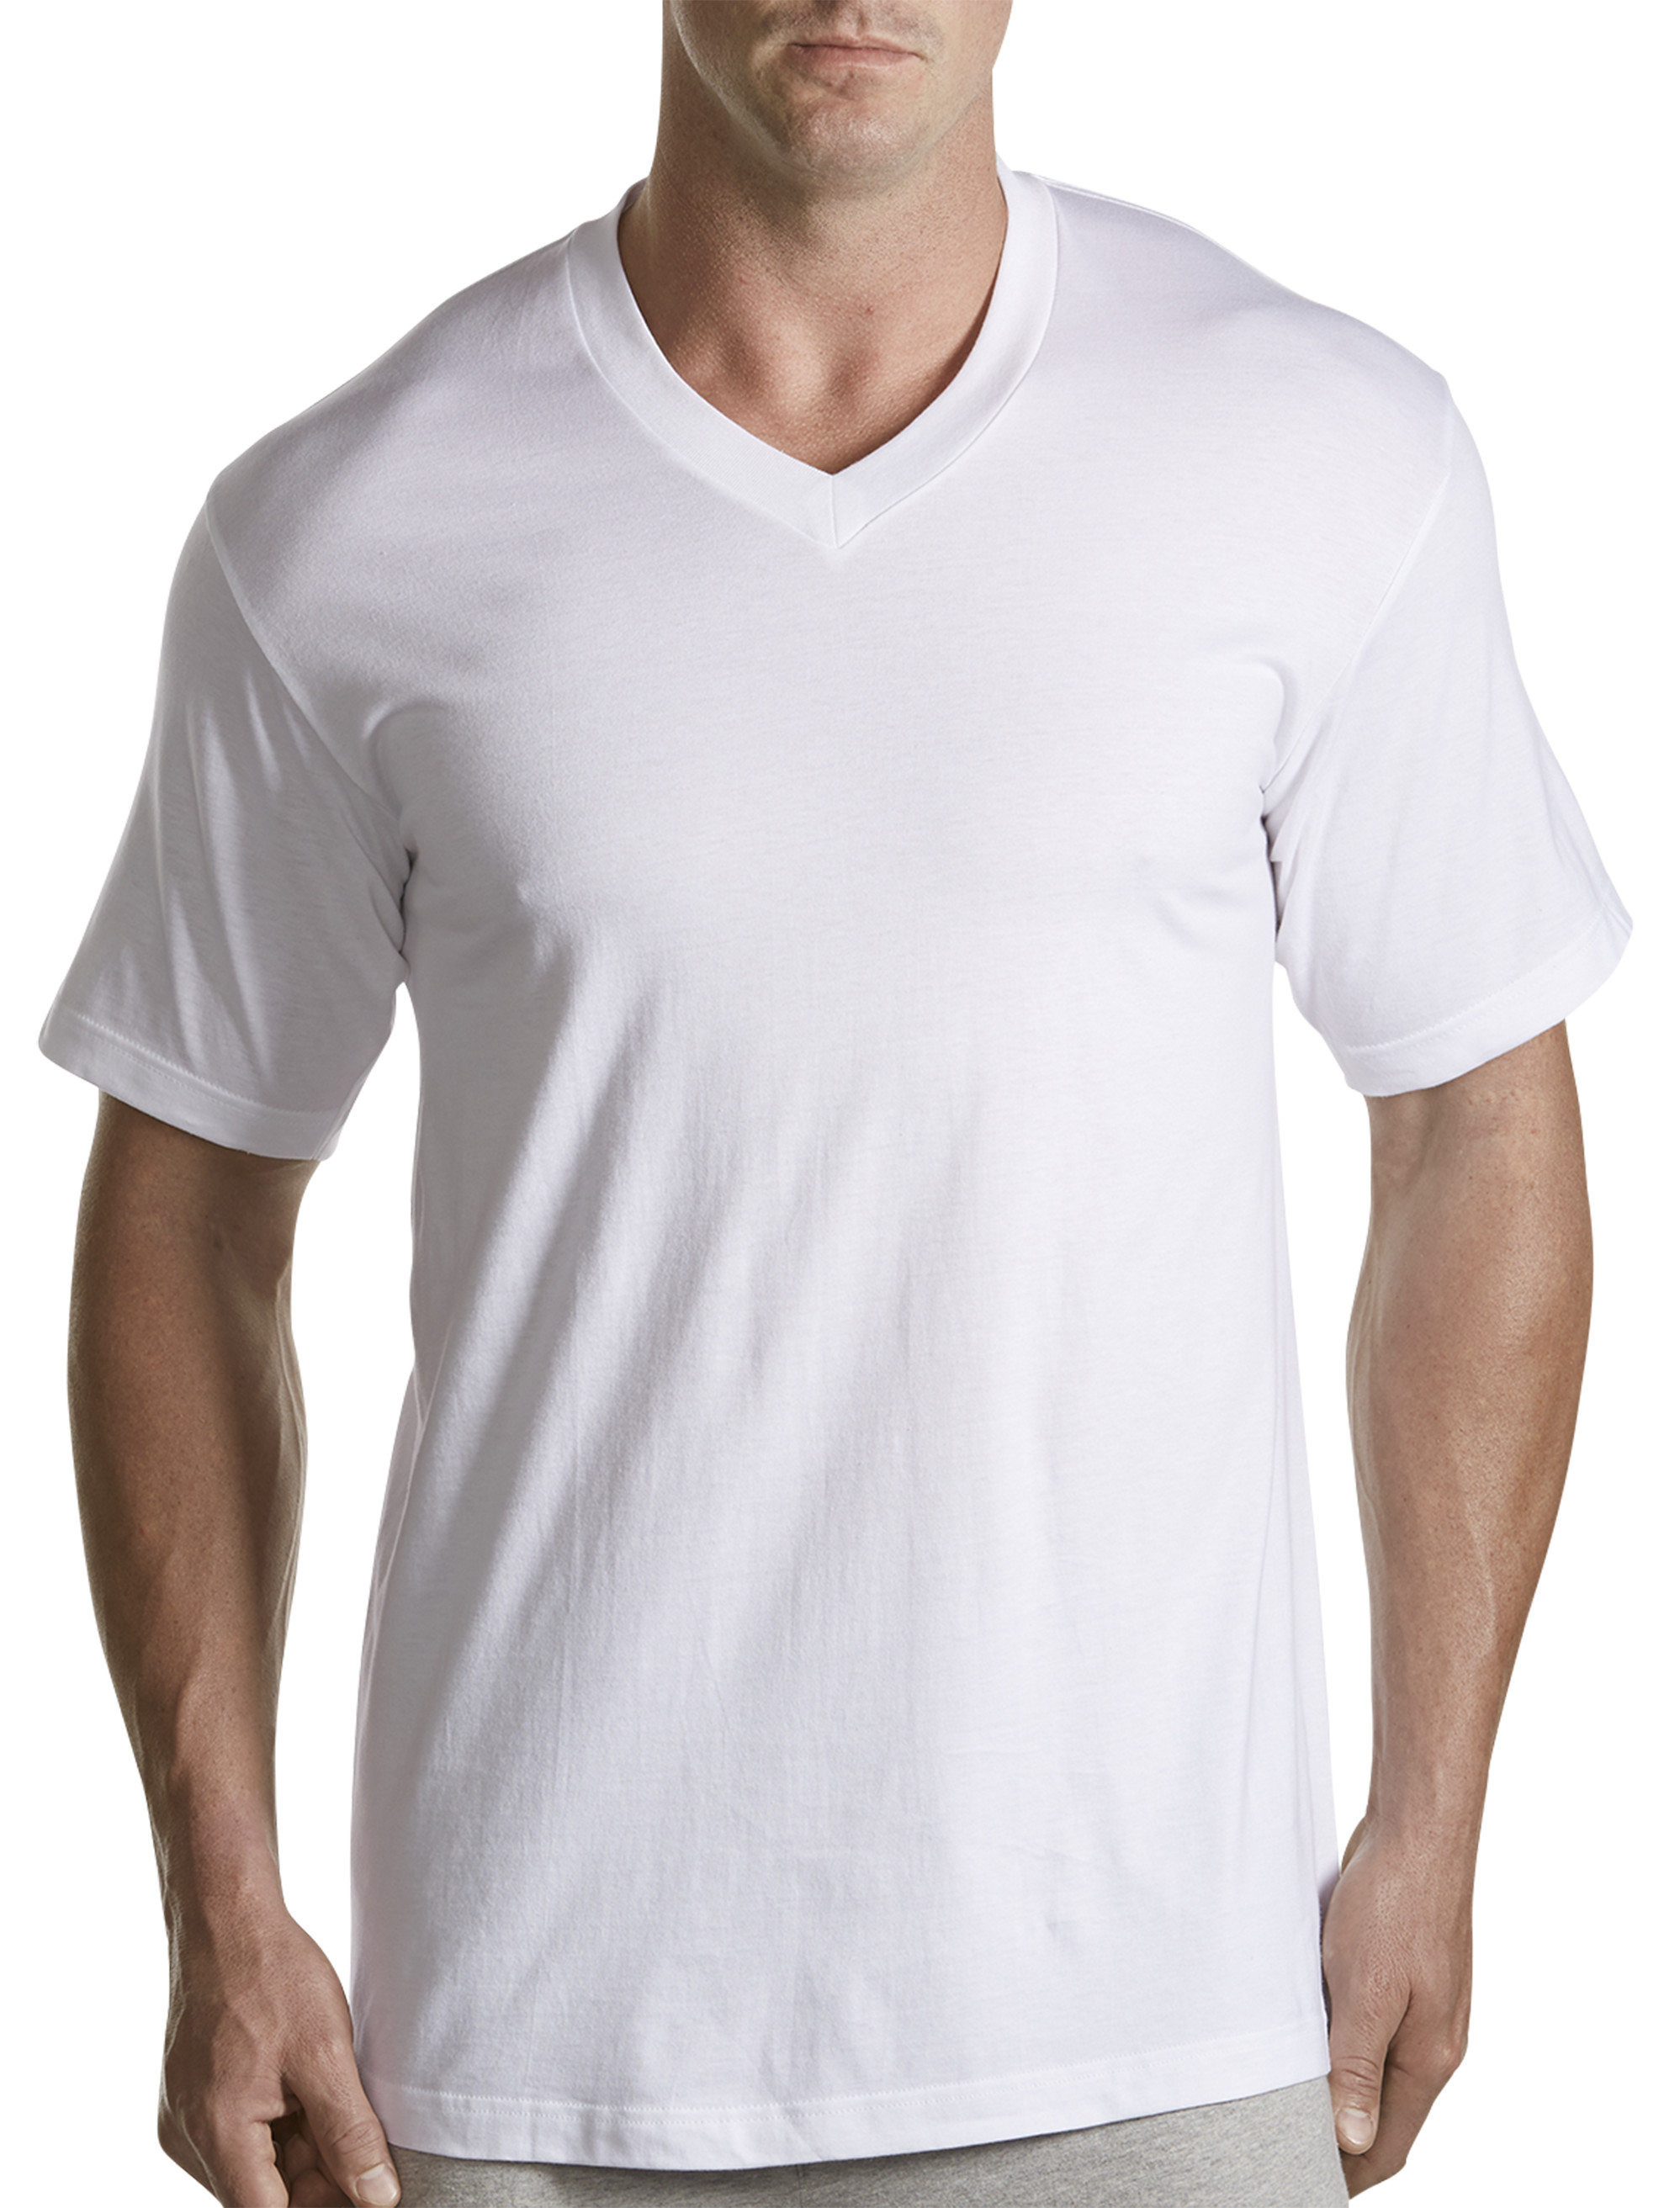 Harbor Bay by DXL Big and Tall Men's Shapewear Tank T-Shirt, White, 1XL 